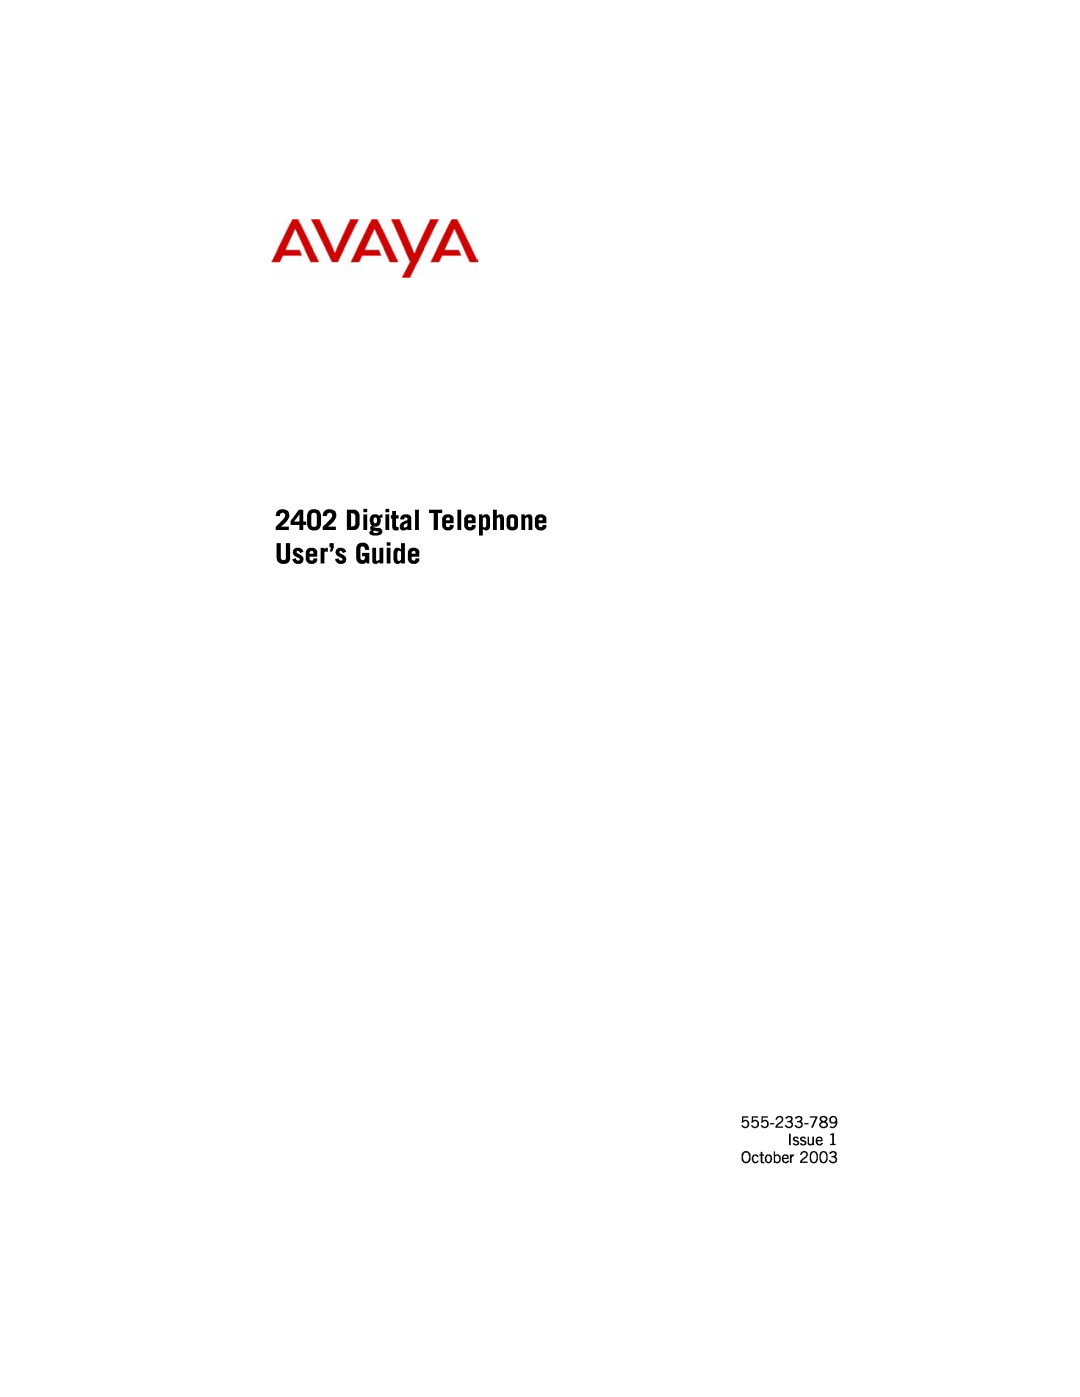 Avaya 2402 manual Digital Telephone User’s Guide, Issue 1 October 